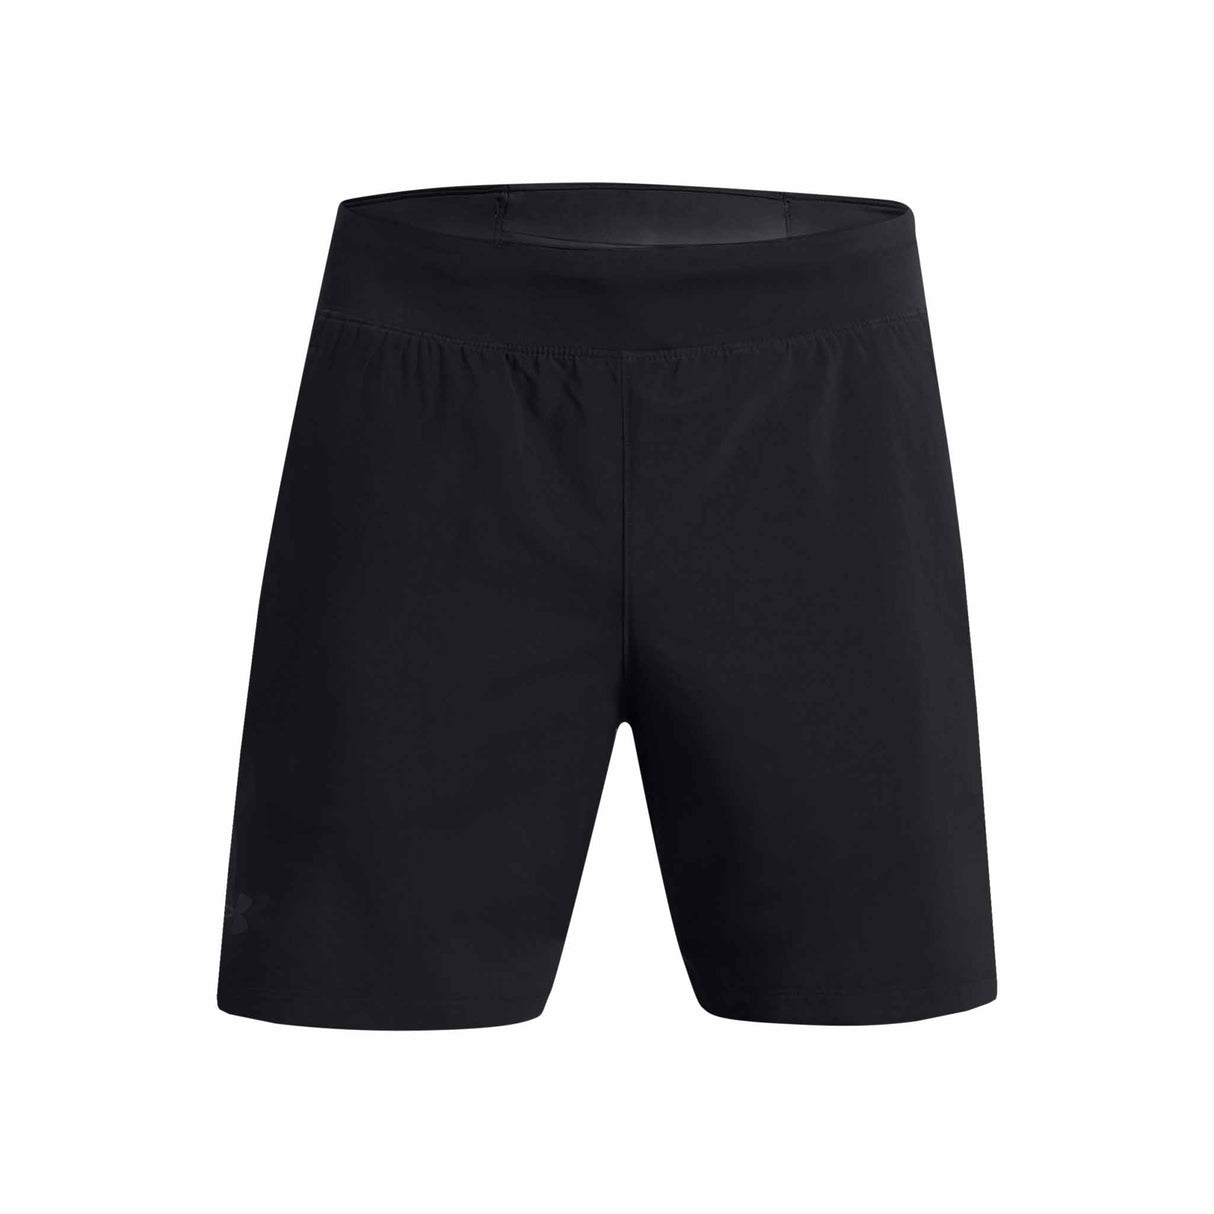 Under Armour Launch RunElite shorts homme - black / reflective